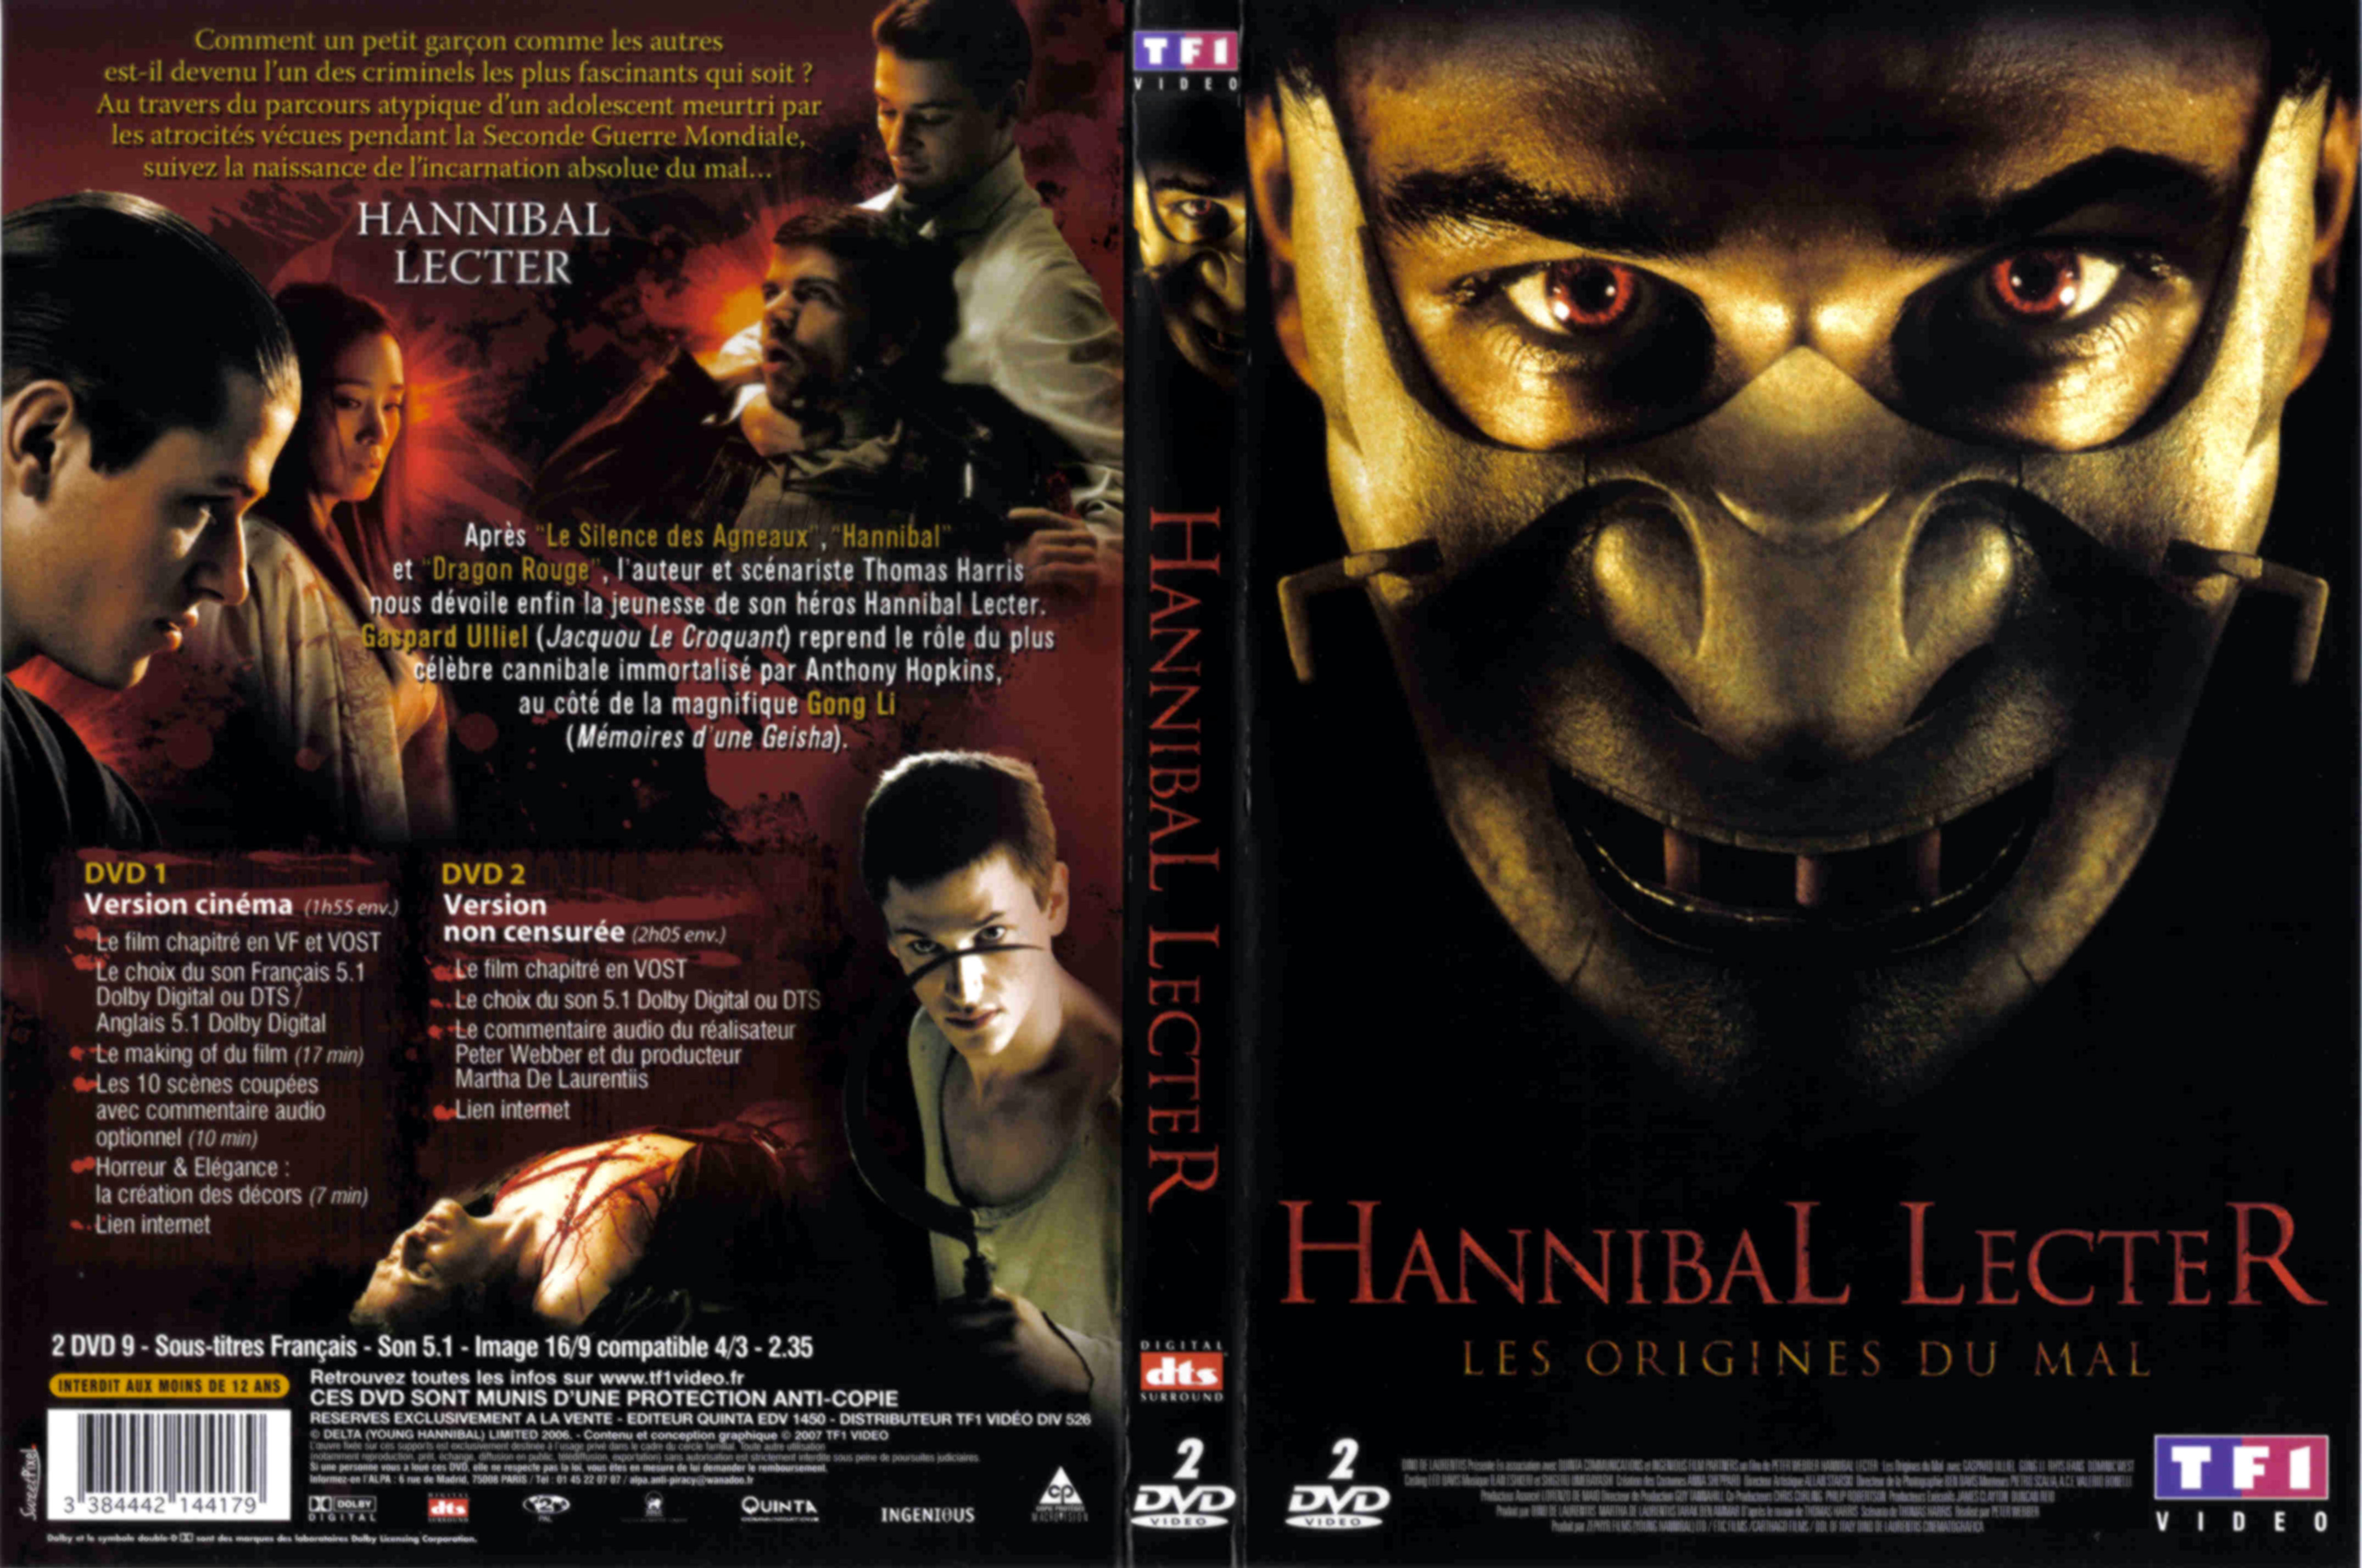 Jaquette DVD Hannibal Lecter les origines du mal v2